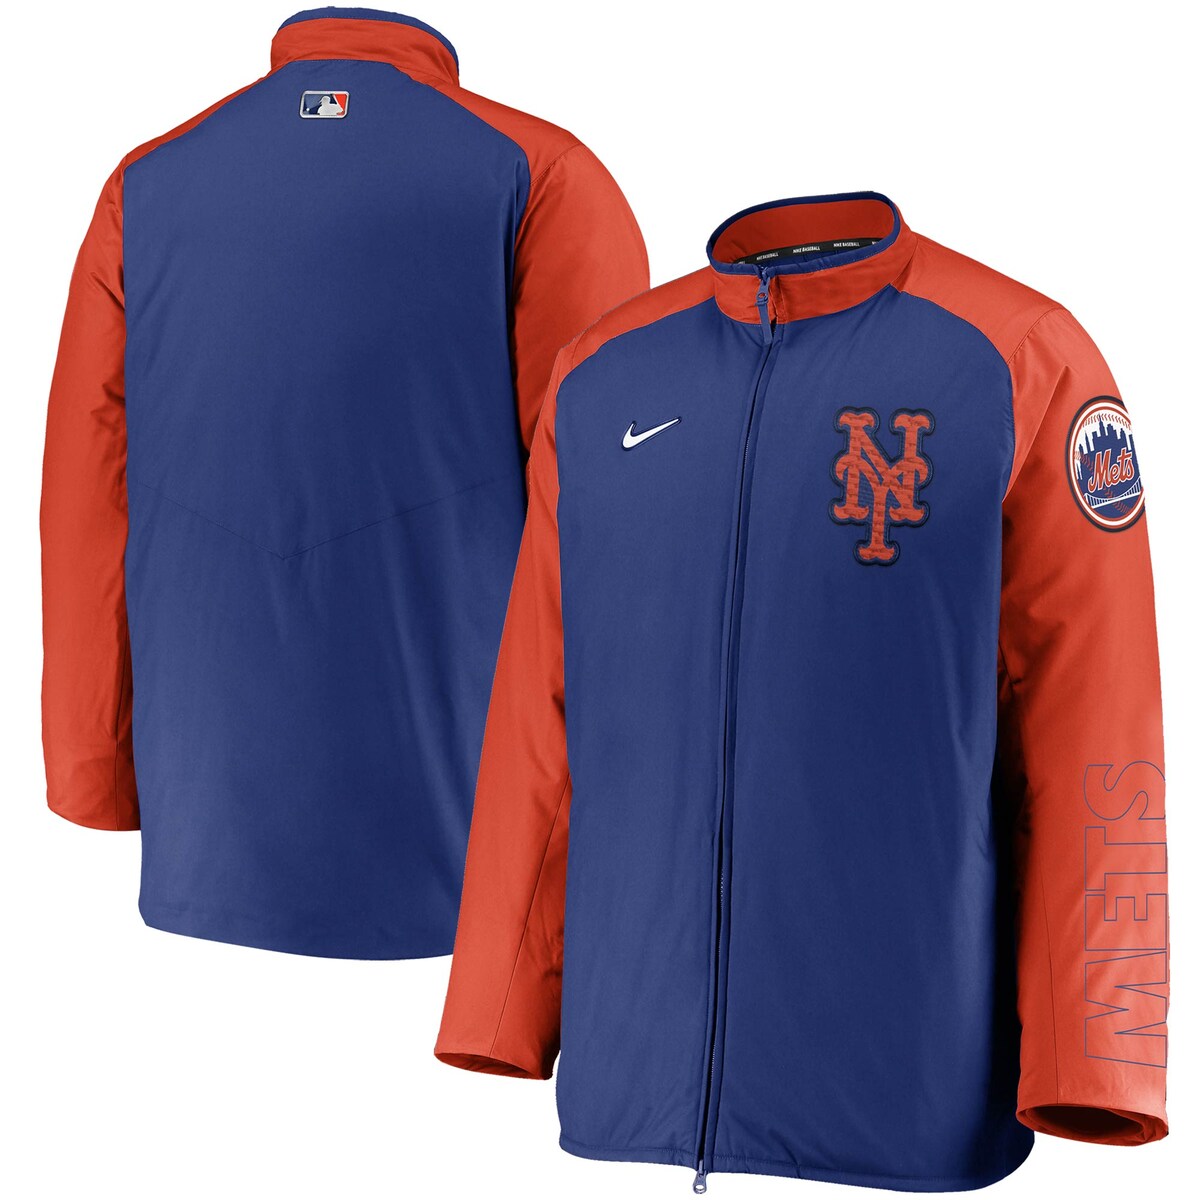 MLB メッツ ジャケット Nike ナイキ メンズ ロイヤル (Men's MLB Nike Authentic Baseball Dugout Jacket) 1